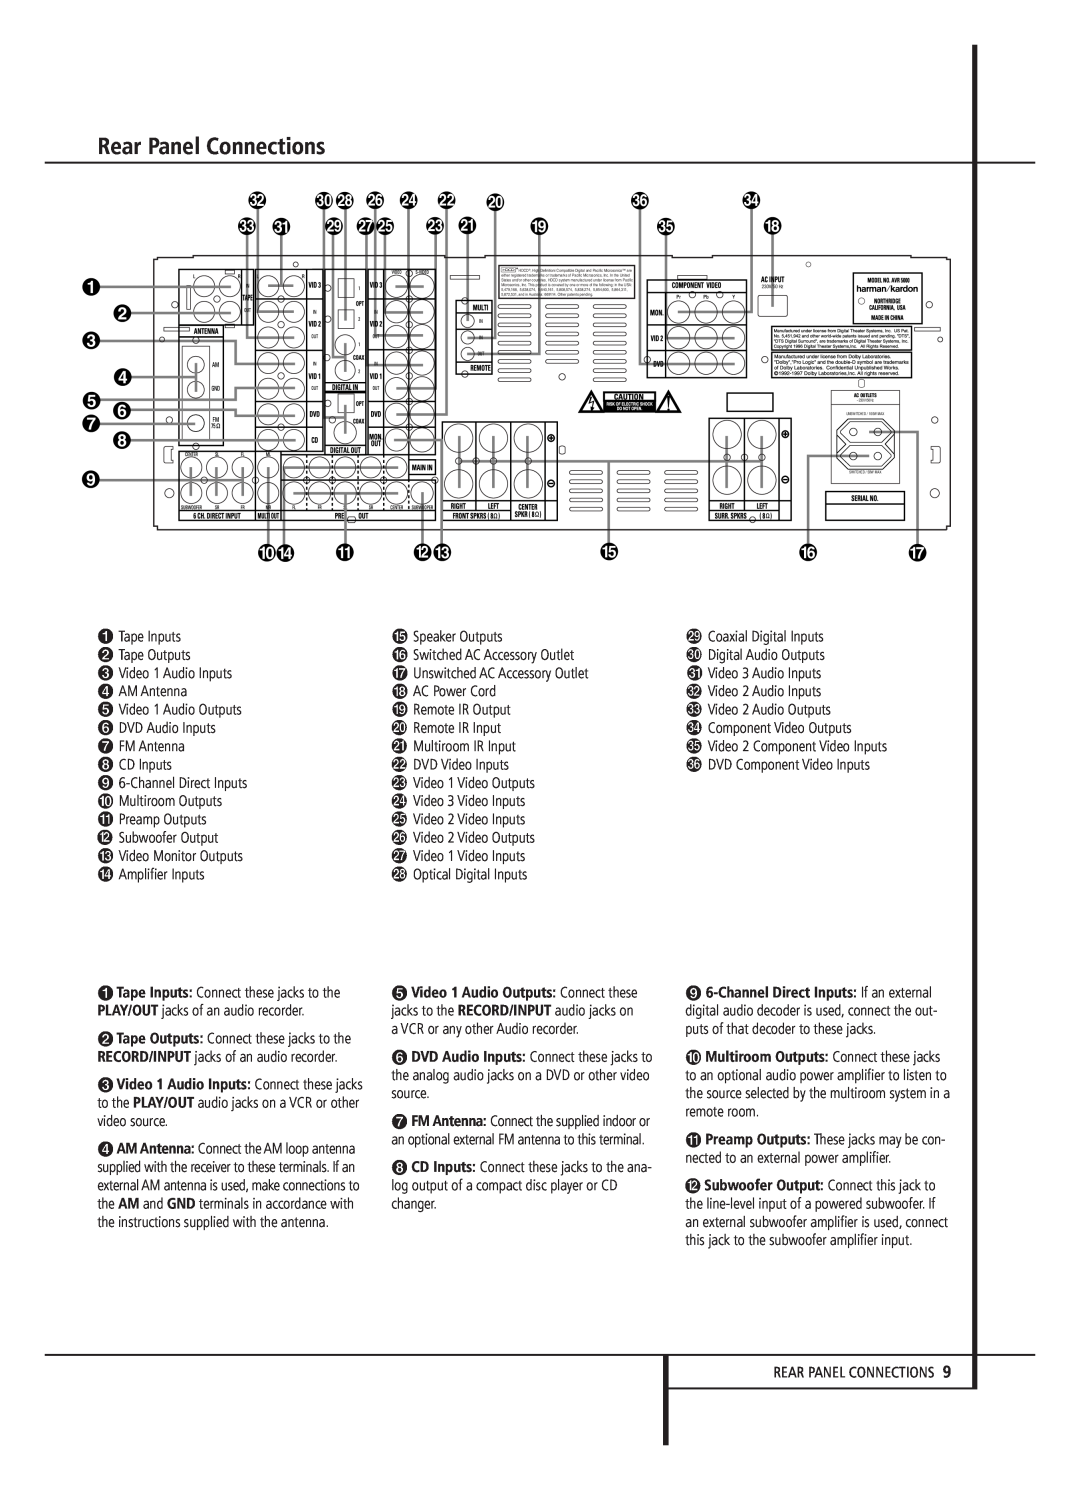 Harman-Kardon AVR 5000 owner manual Rear Panel Connections 